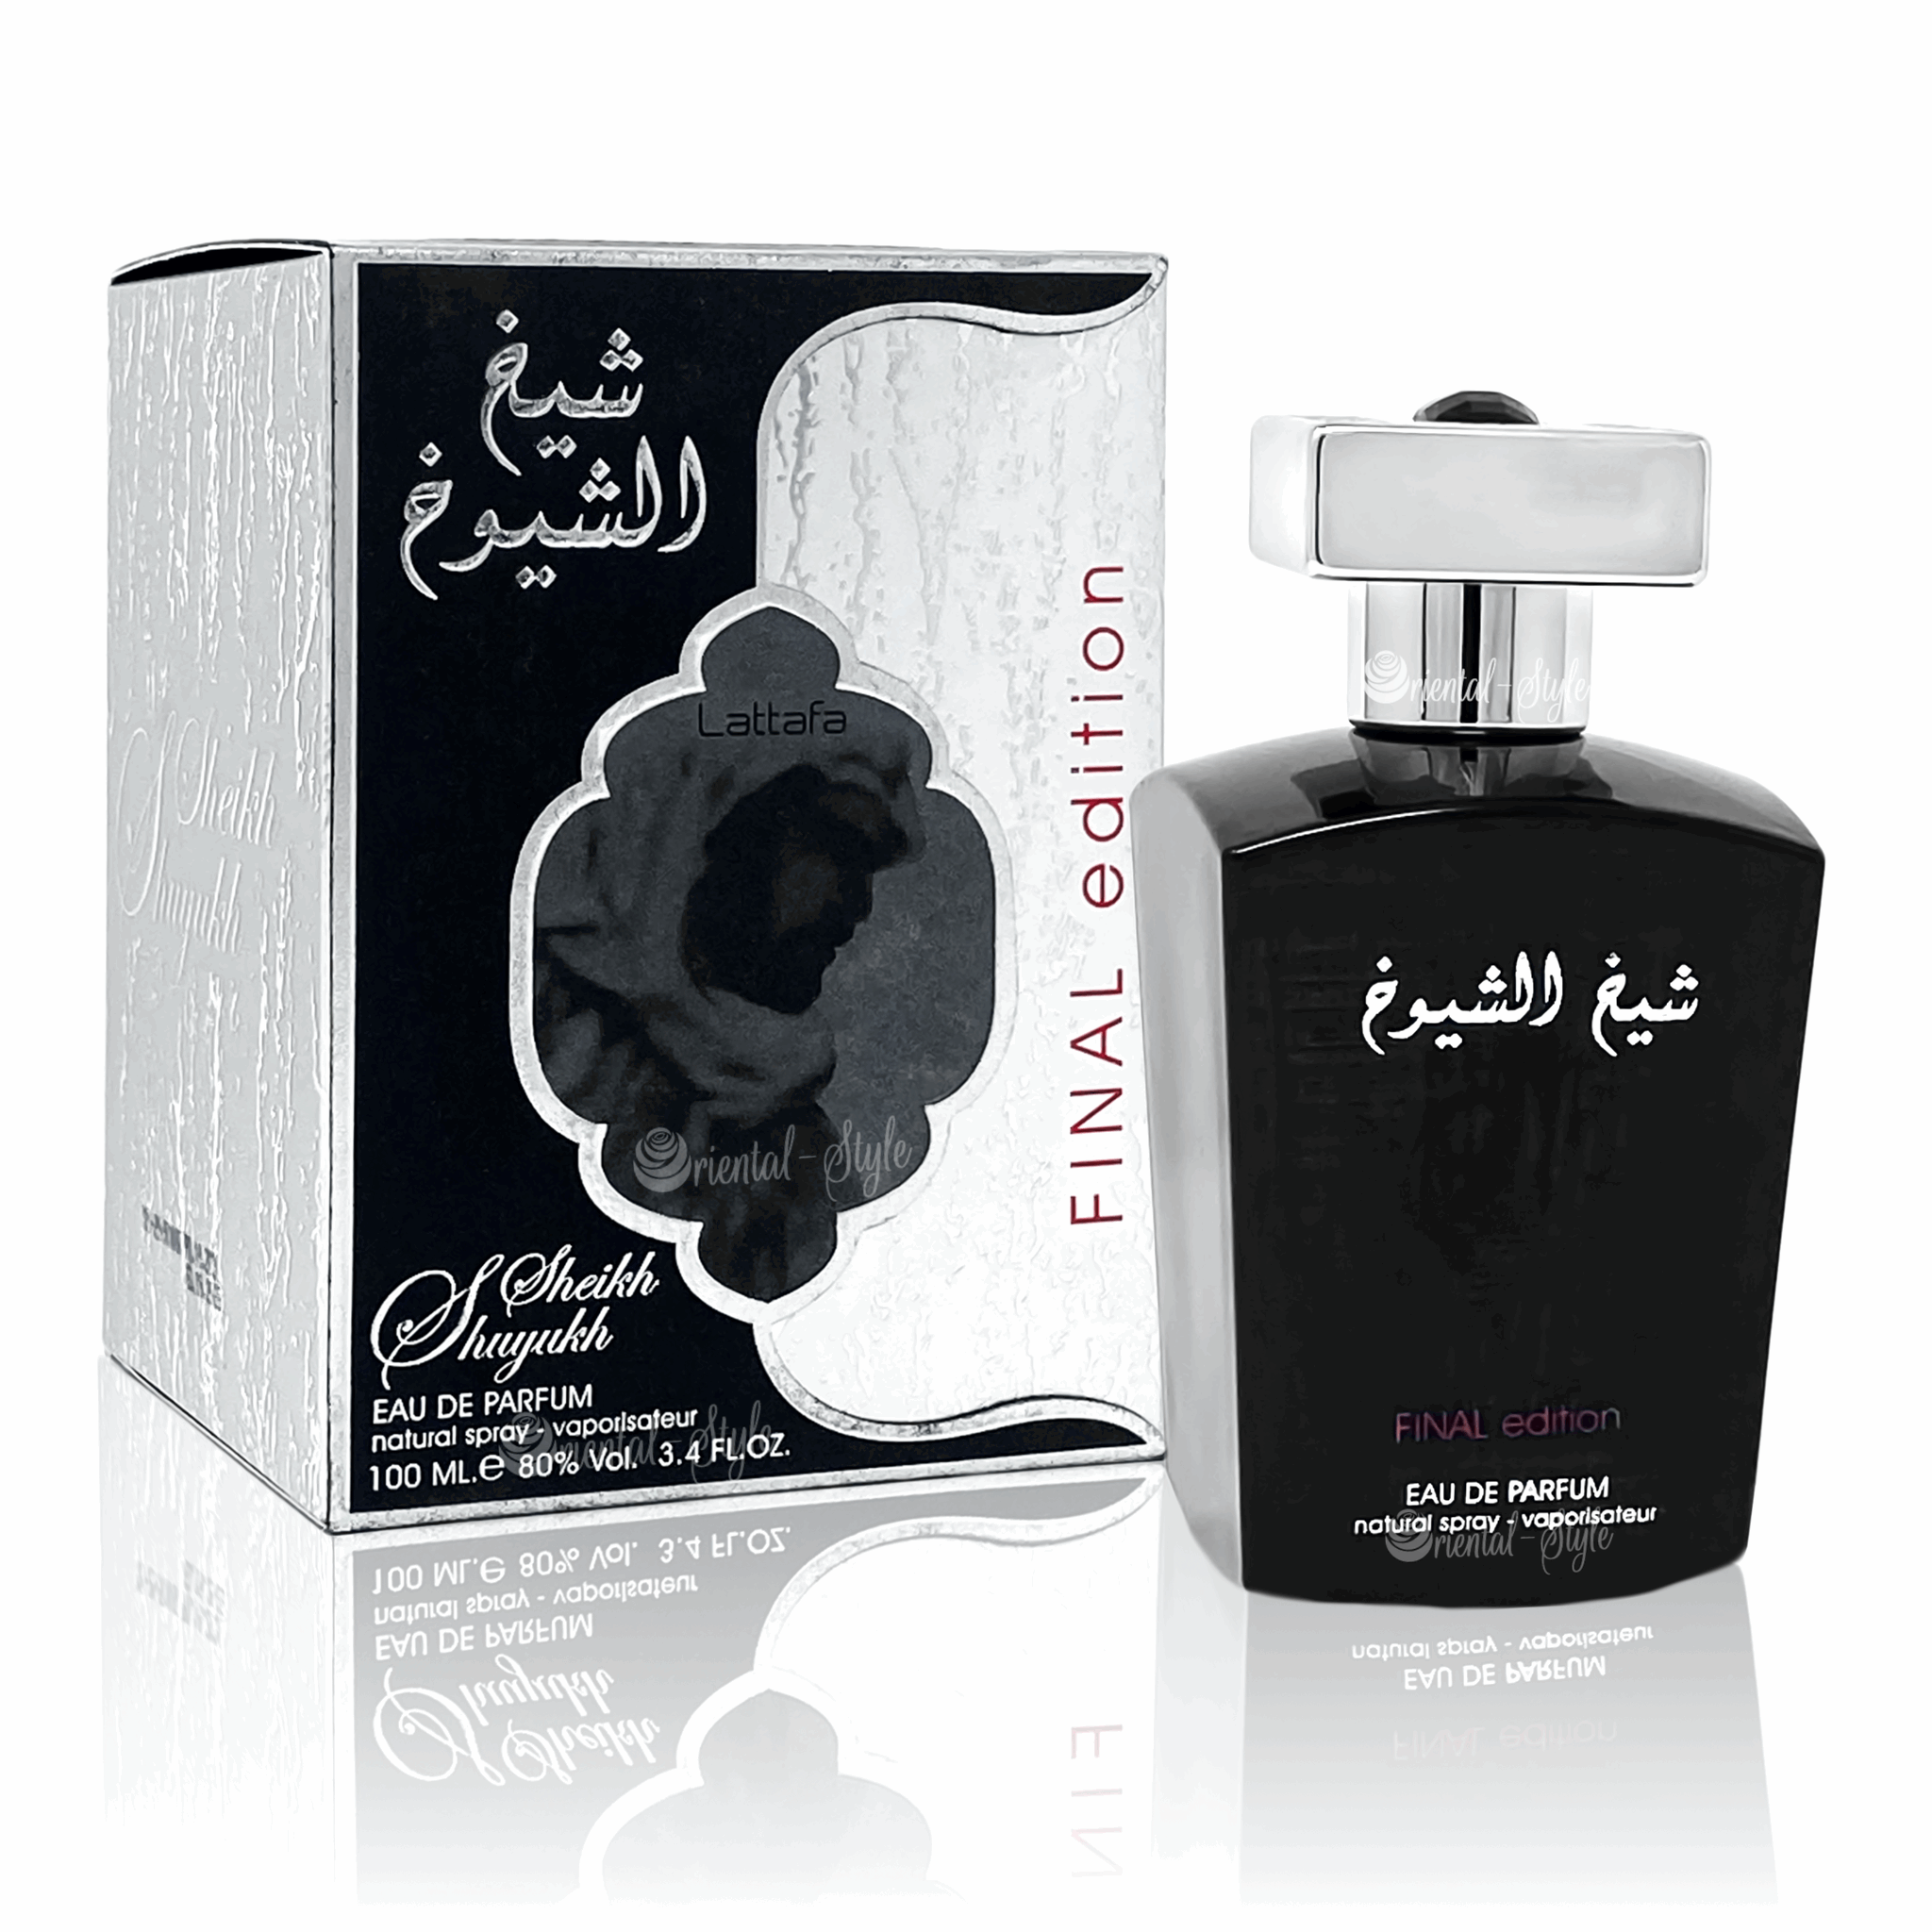 Sheikh Shuyukh Final Edition Lattafa Parfum